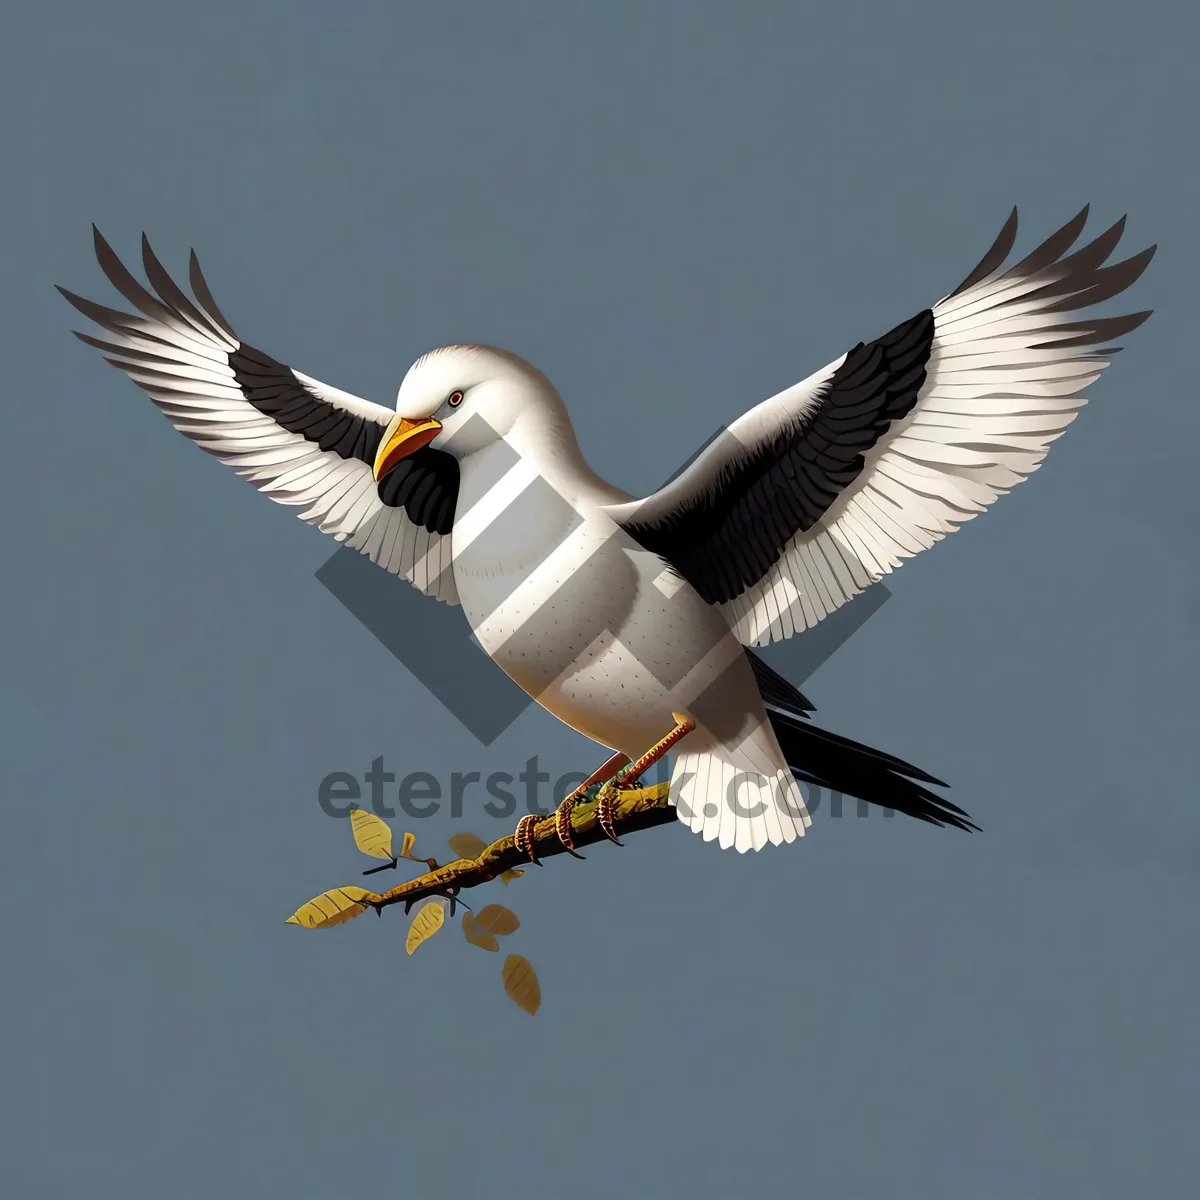 Picture of Graceful Flight: Majestic Seabird Soaring in the Sky